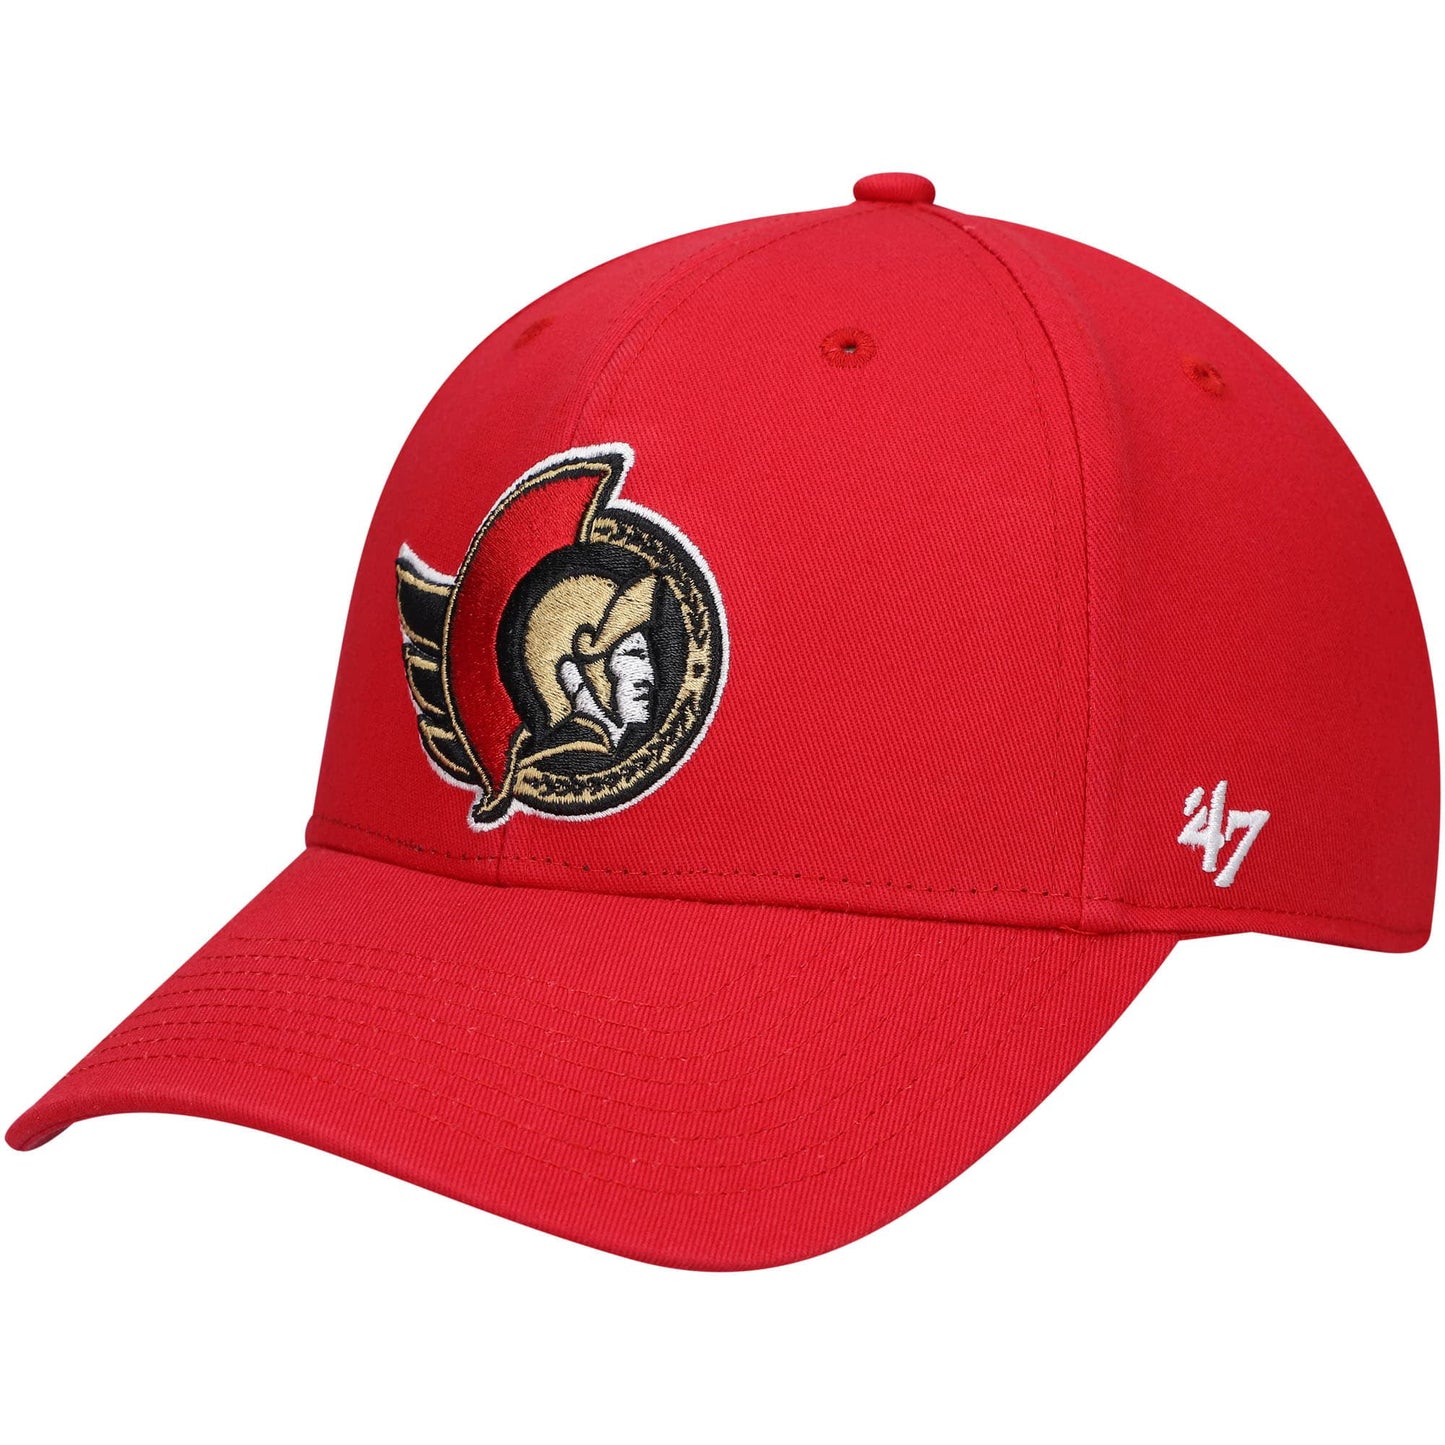 Men's '47 Red Ottawa Senators Legend MVP Adjustable Hat - OSFA